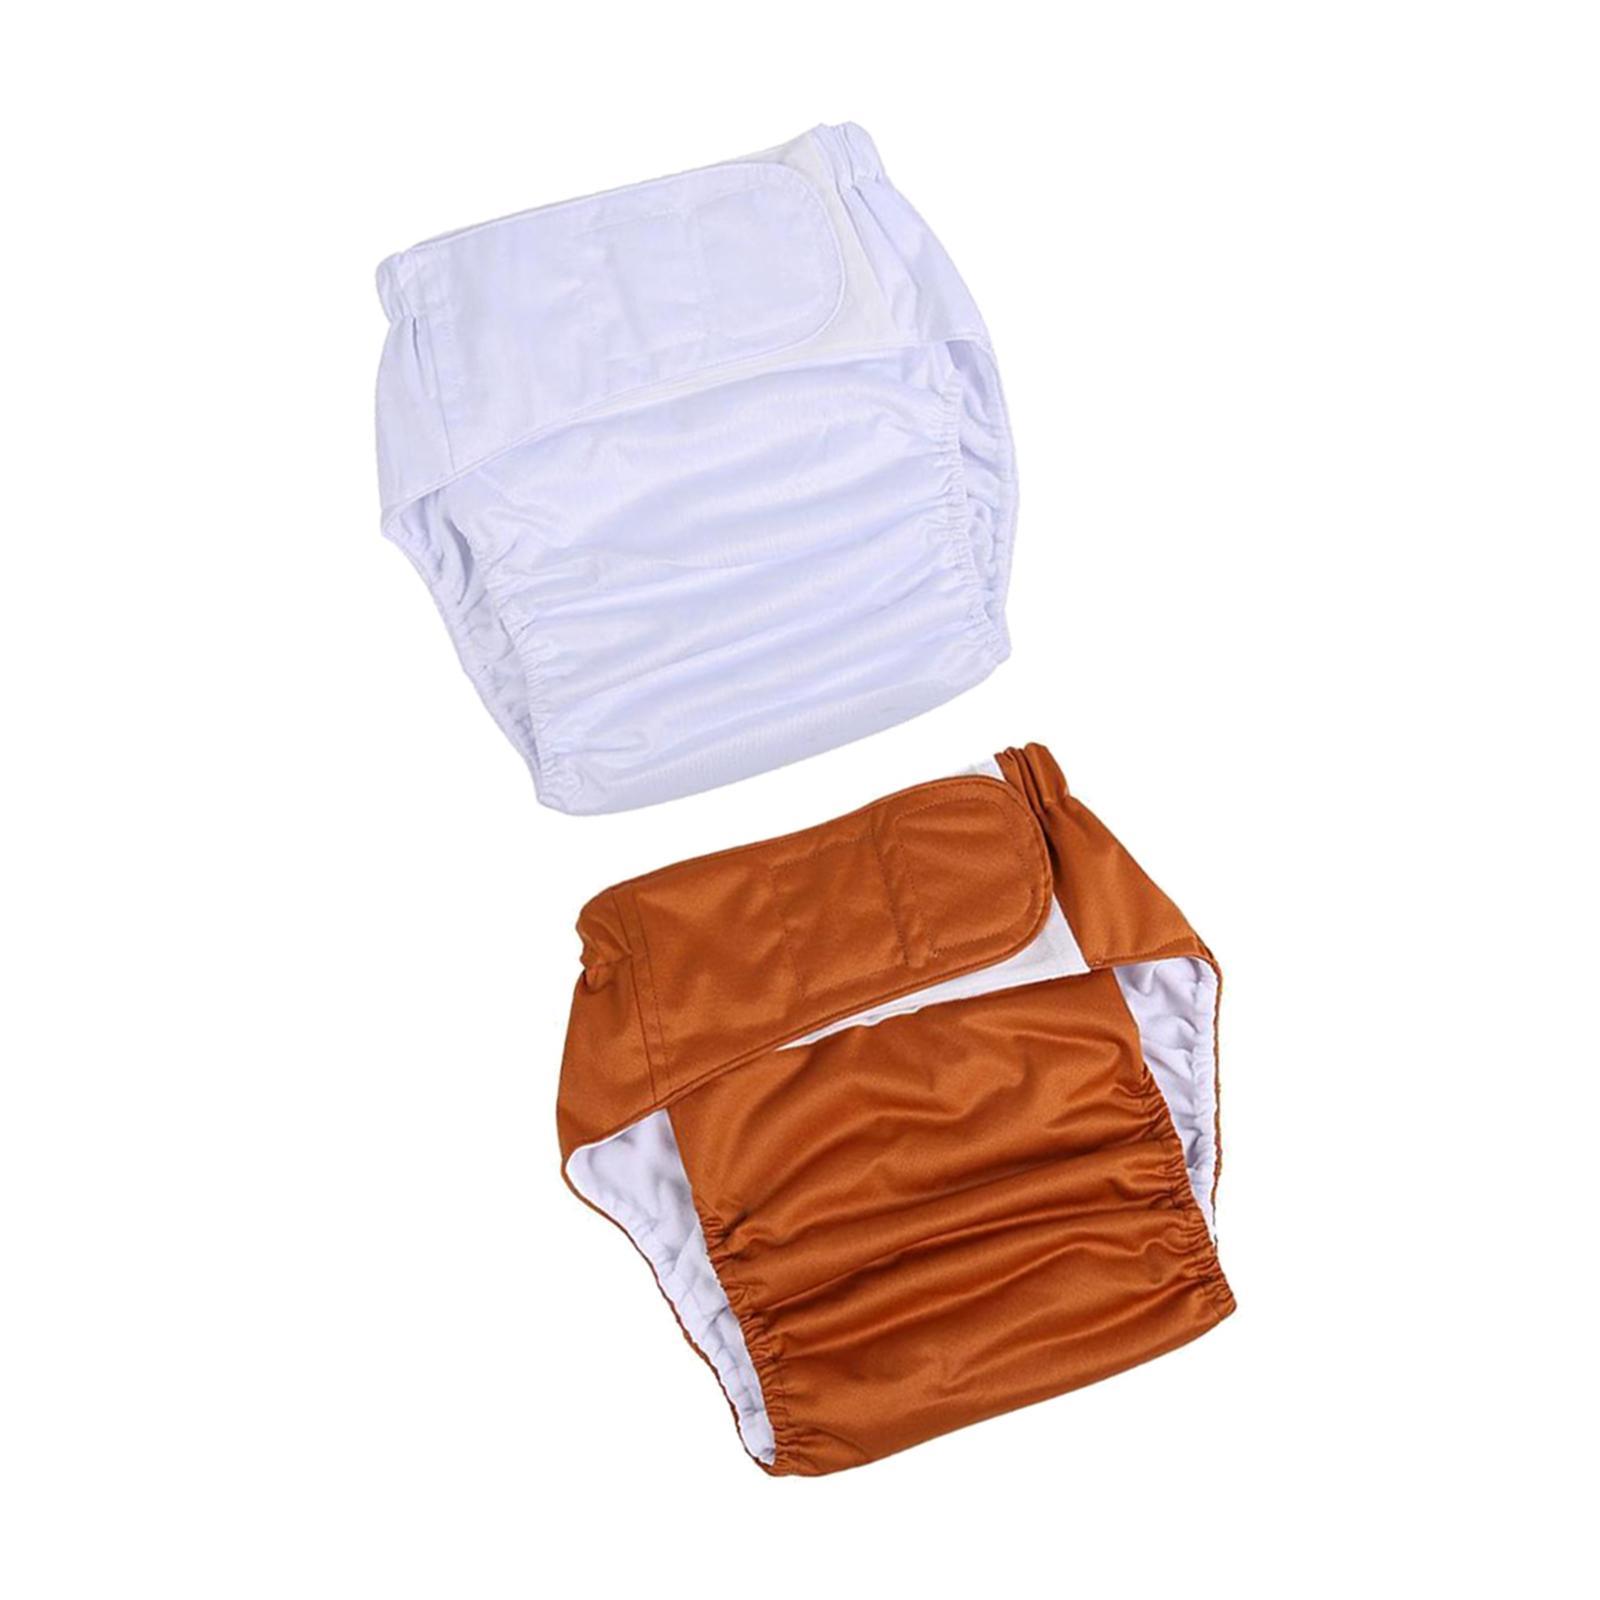 2Pcs Reusable Adult Diaper Nappy for Men Women Leakproof Breathable